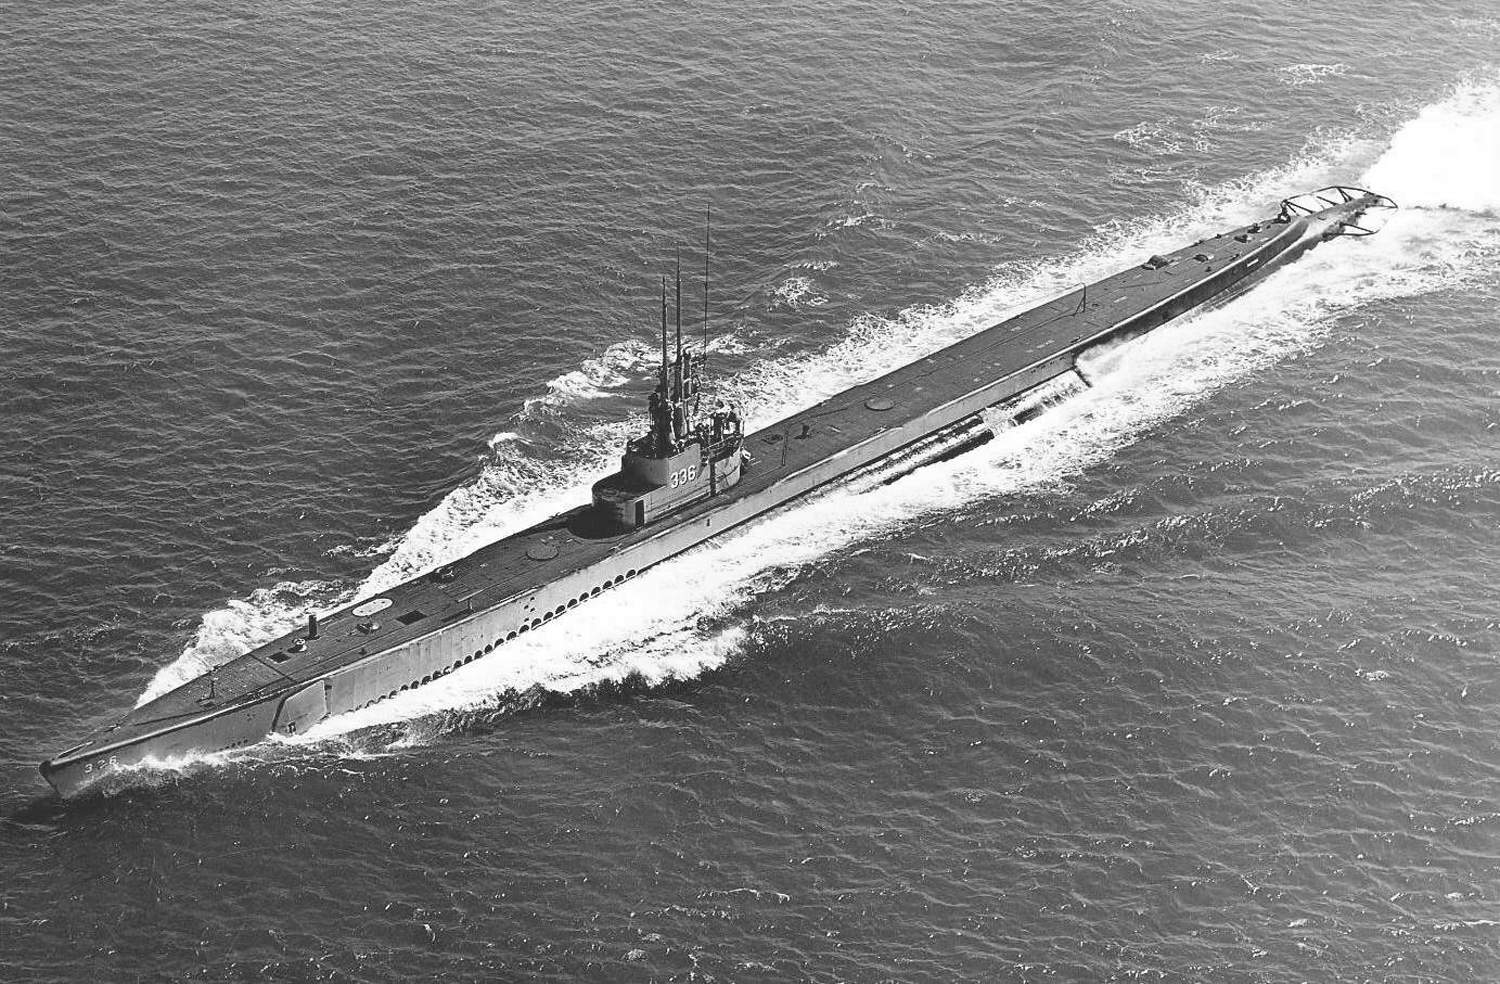 USS Capitaine underway off San Diego, California, United States, 23 Jun 1957